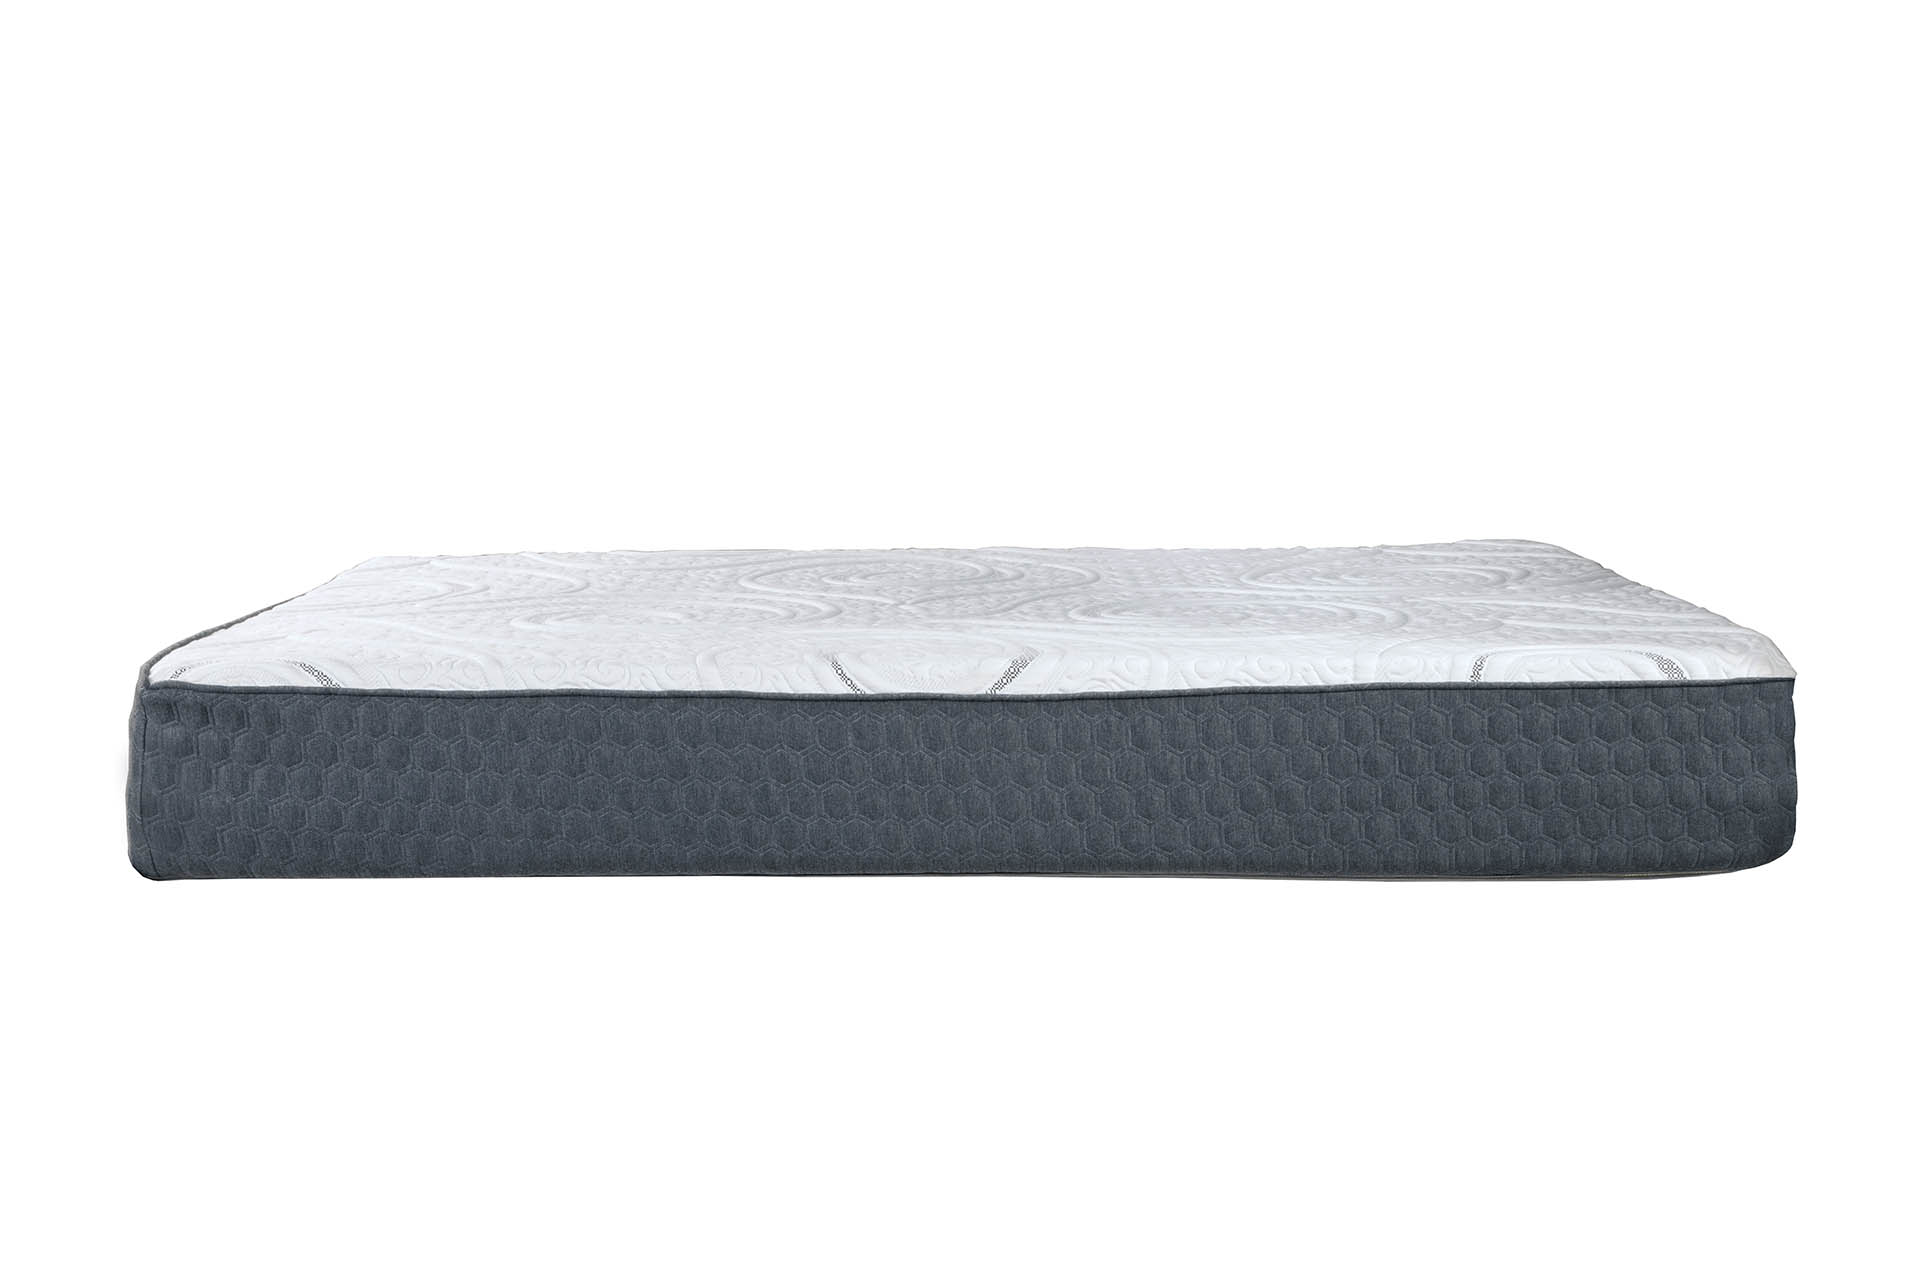 Side view of PremaSleep Supreme Comfort Firm mattress